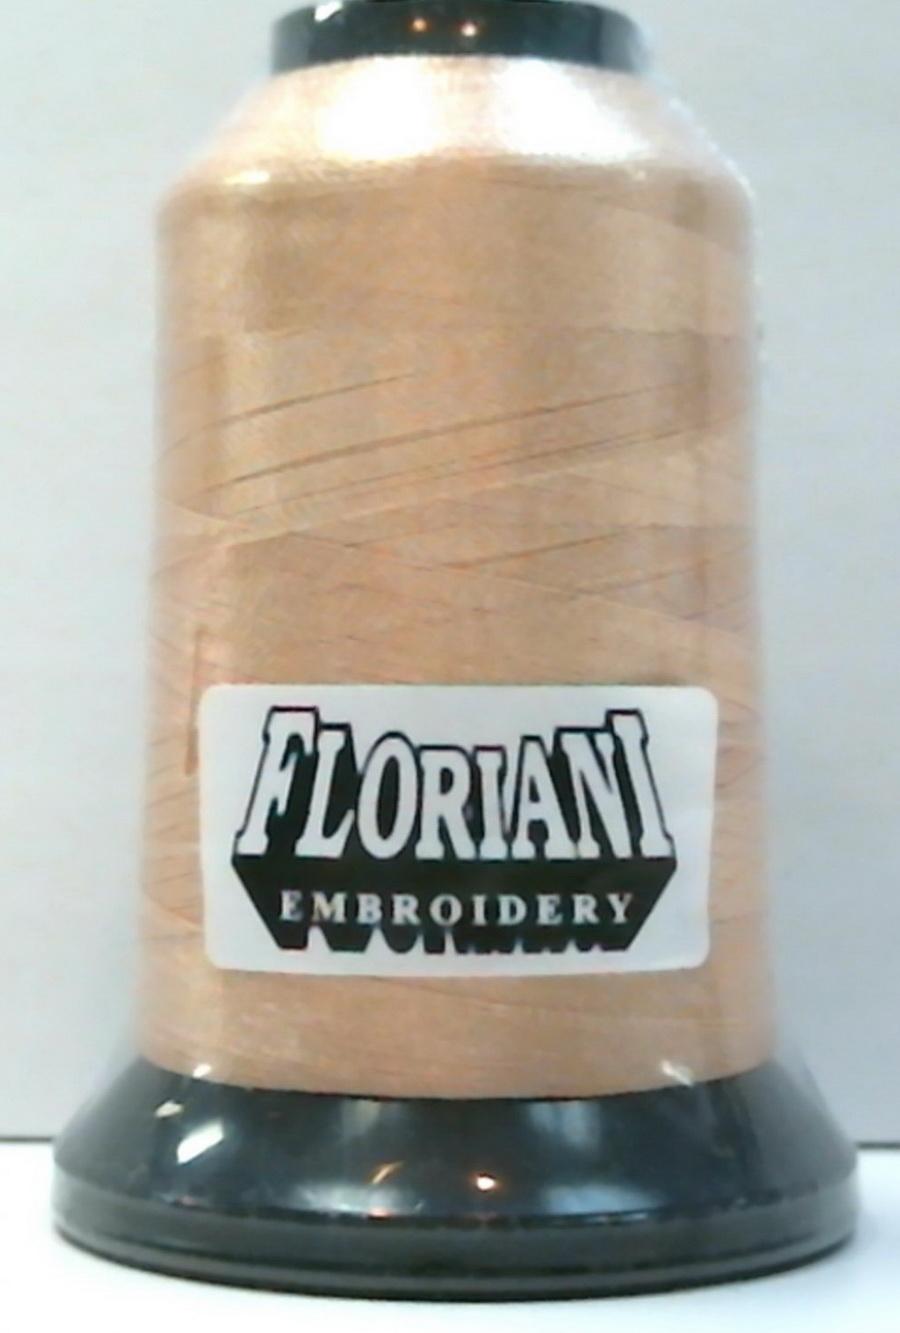 PF0740 - Floriani Embroidery Thread, Sand Castle, 1,100yd spool